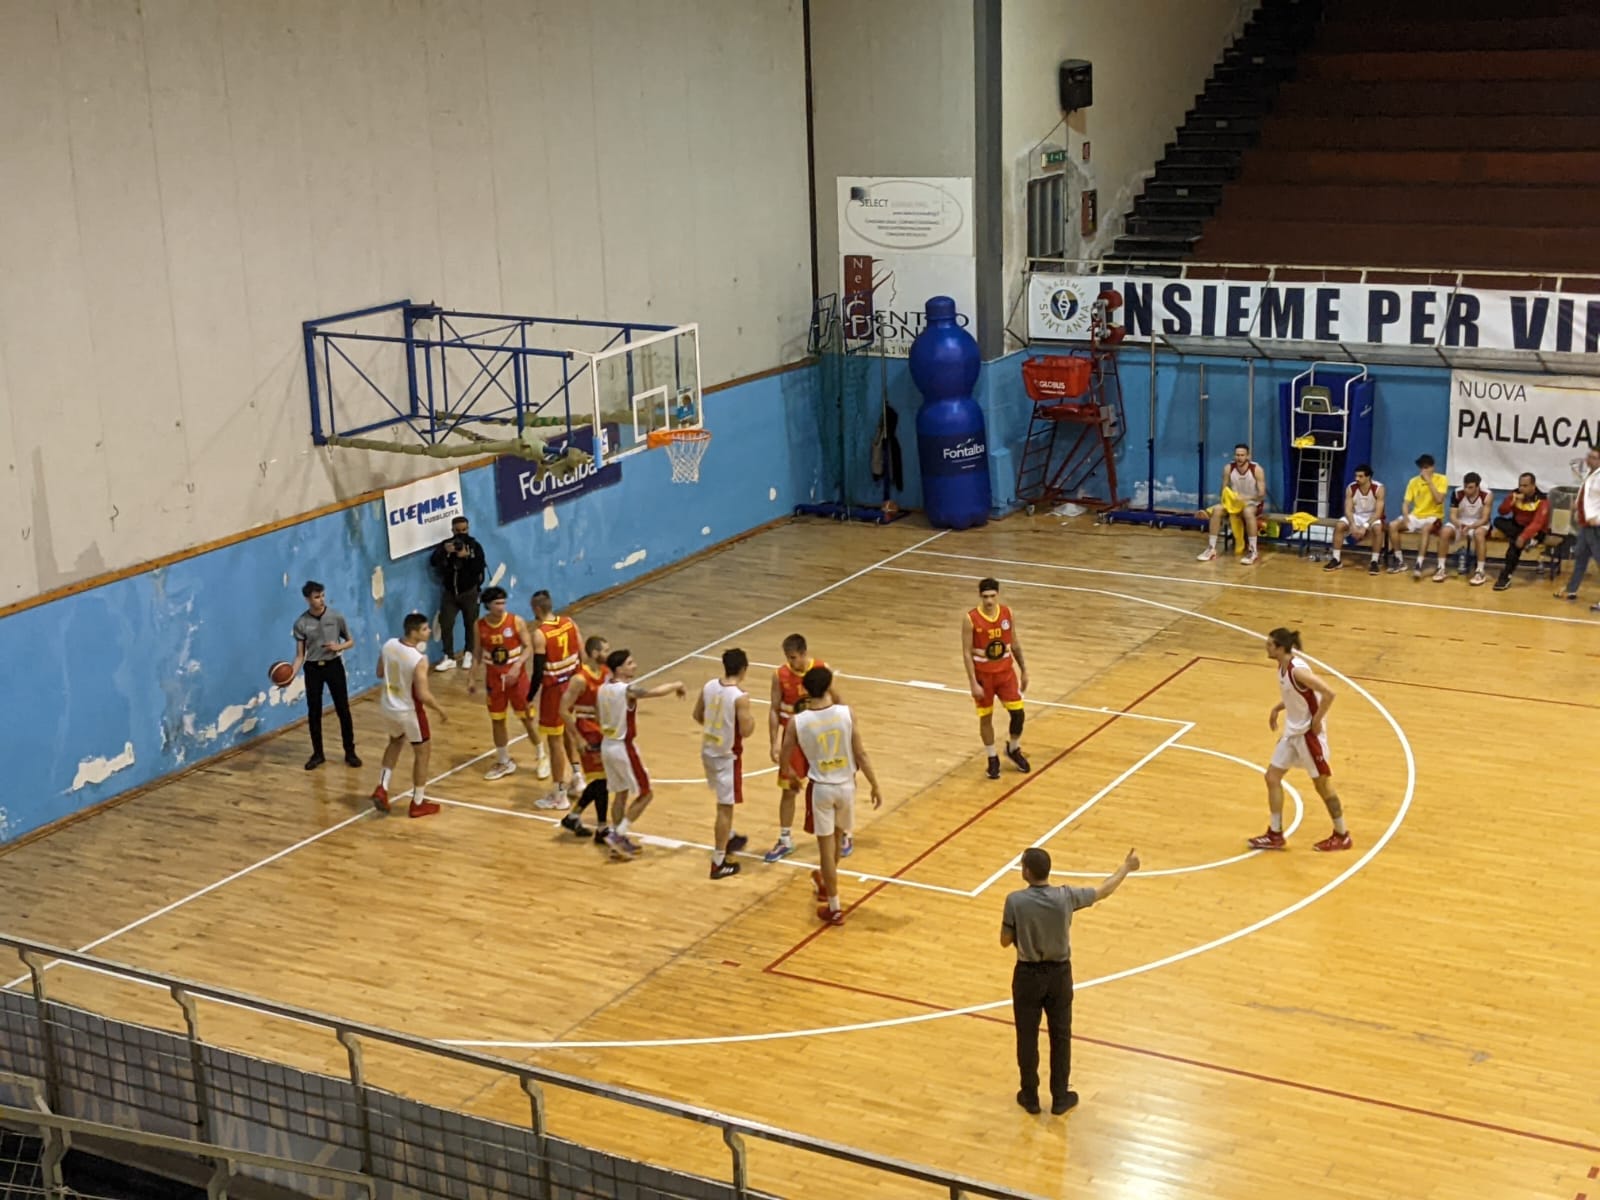 Nuova Pallacanestro Messina - Basket School Messina - gara 2